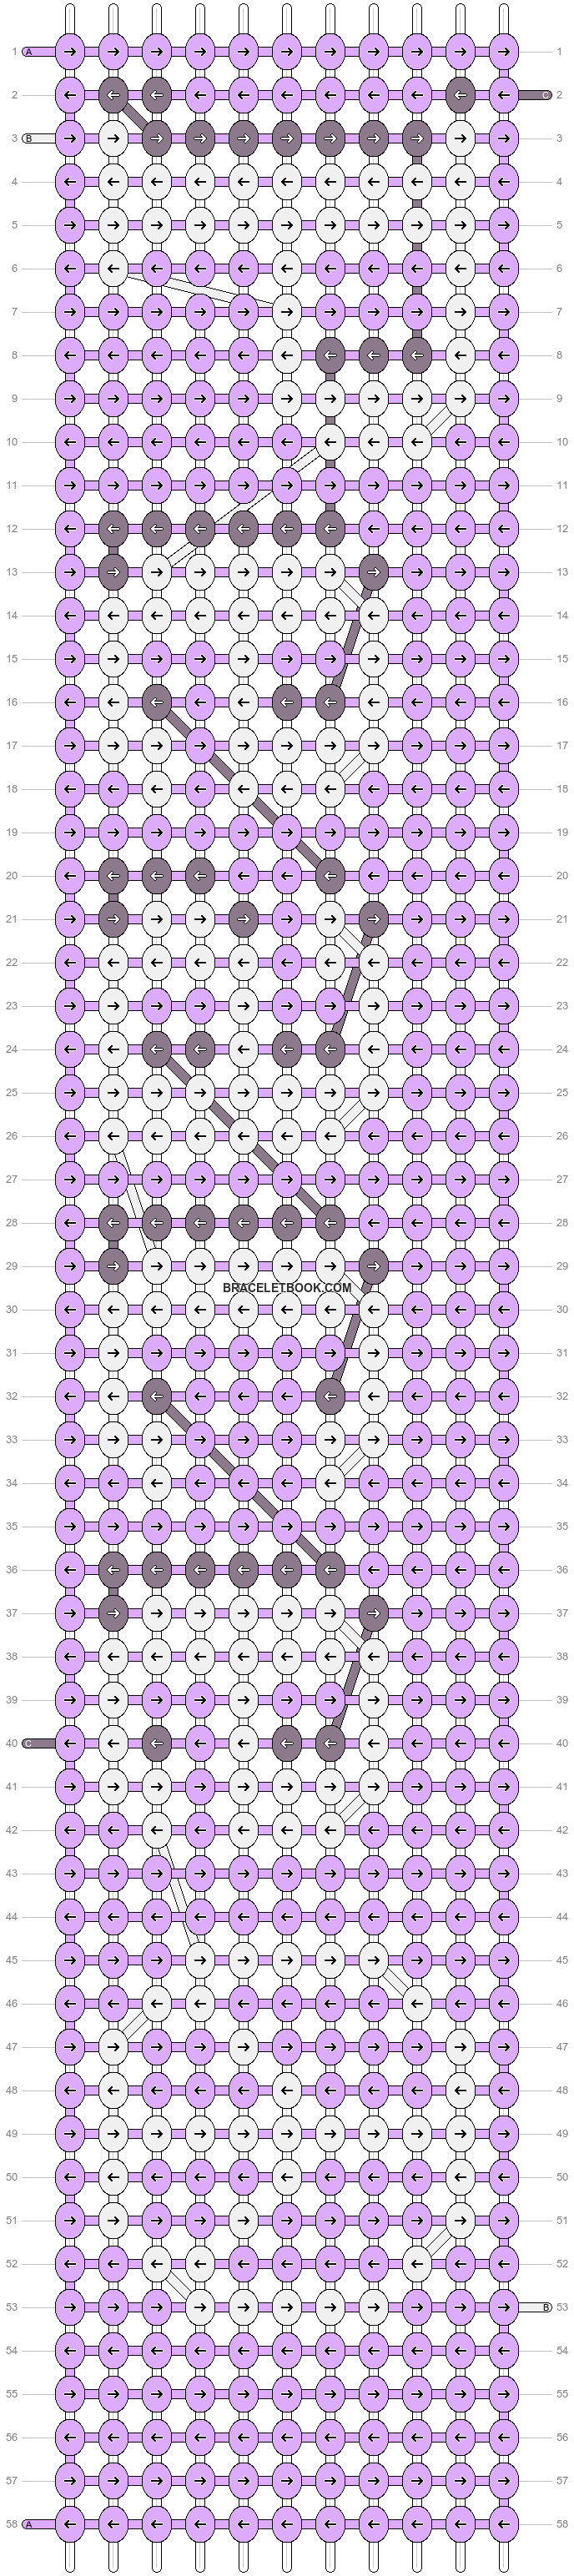 Alpha pattern #21467 variation #75130 pattern